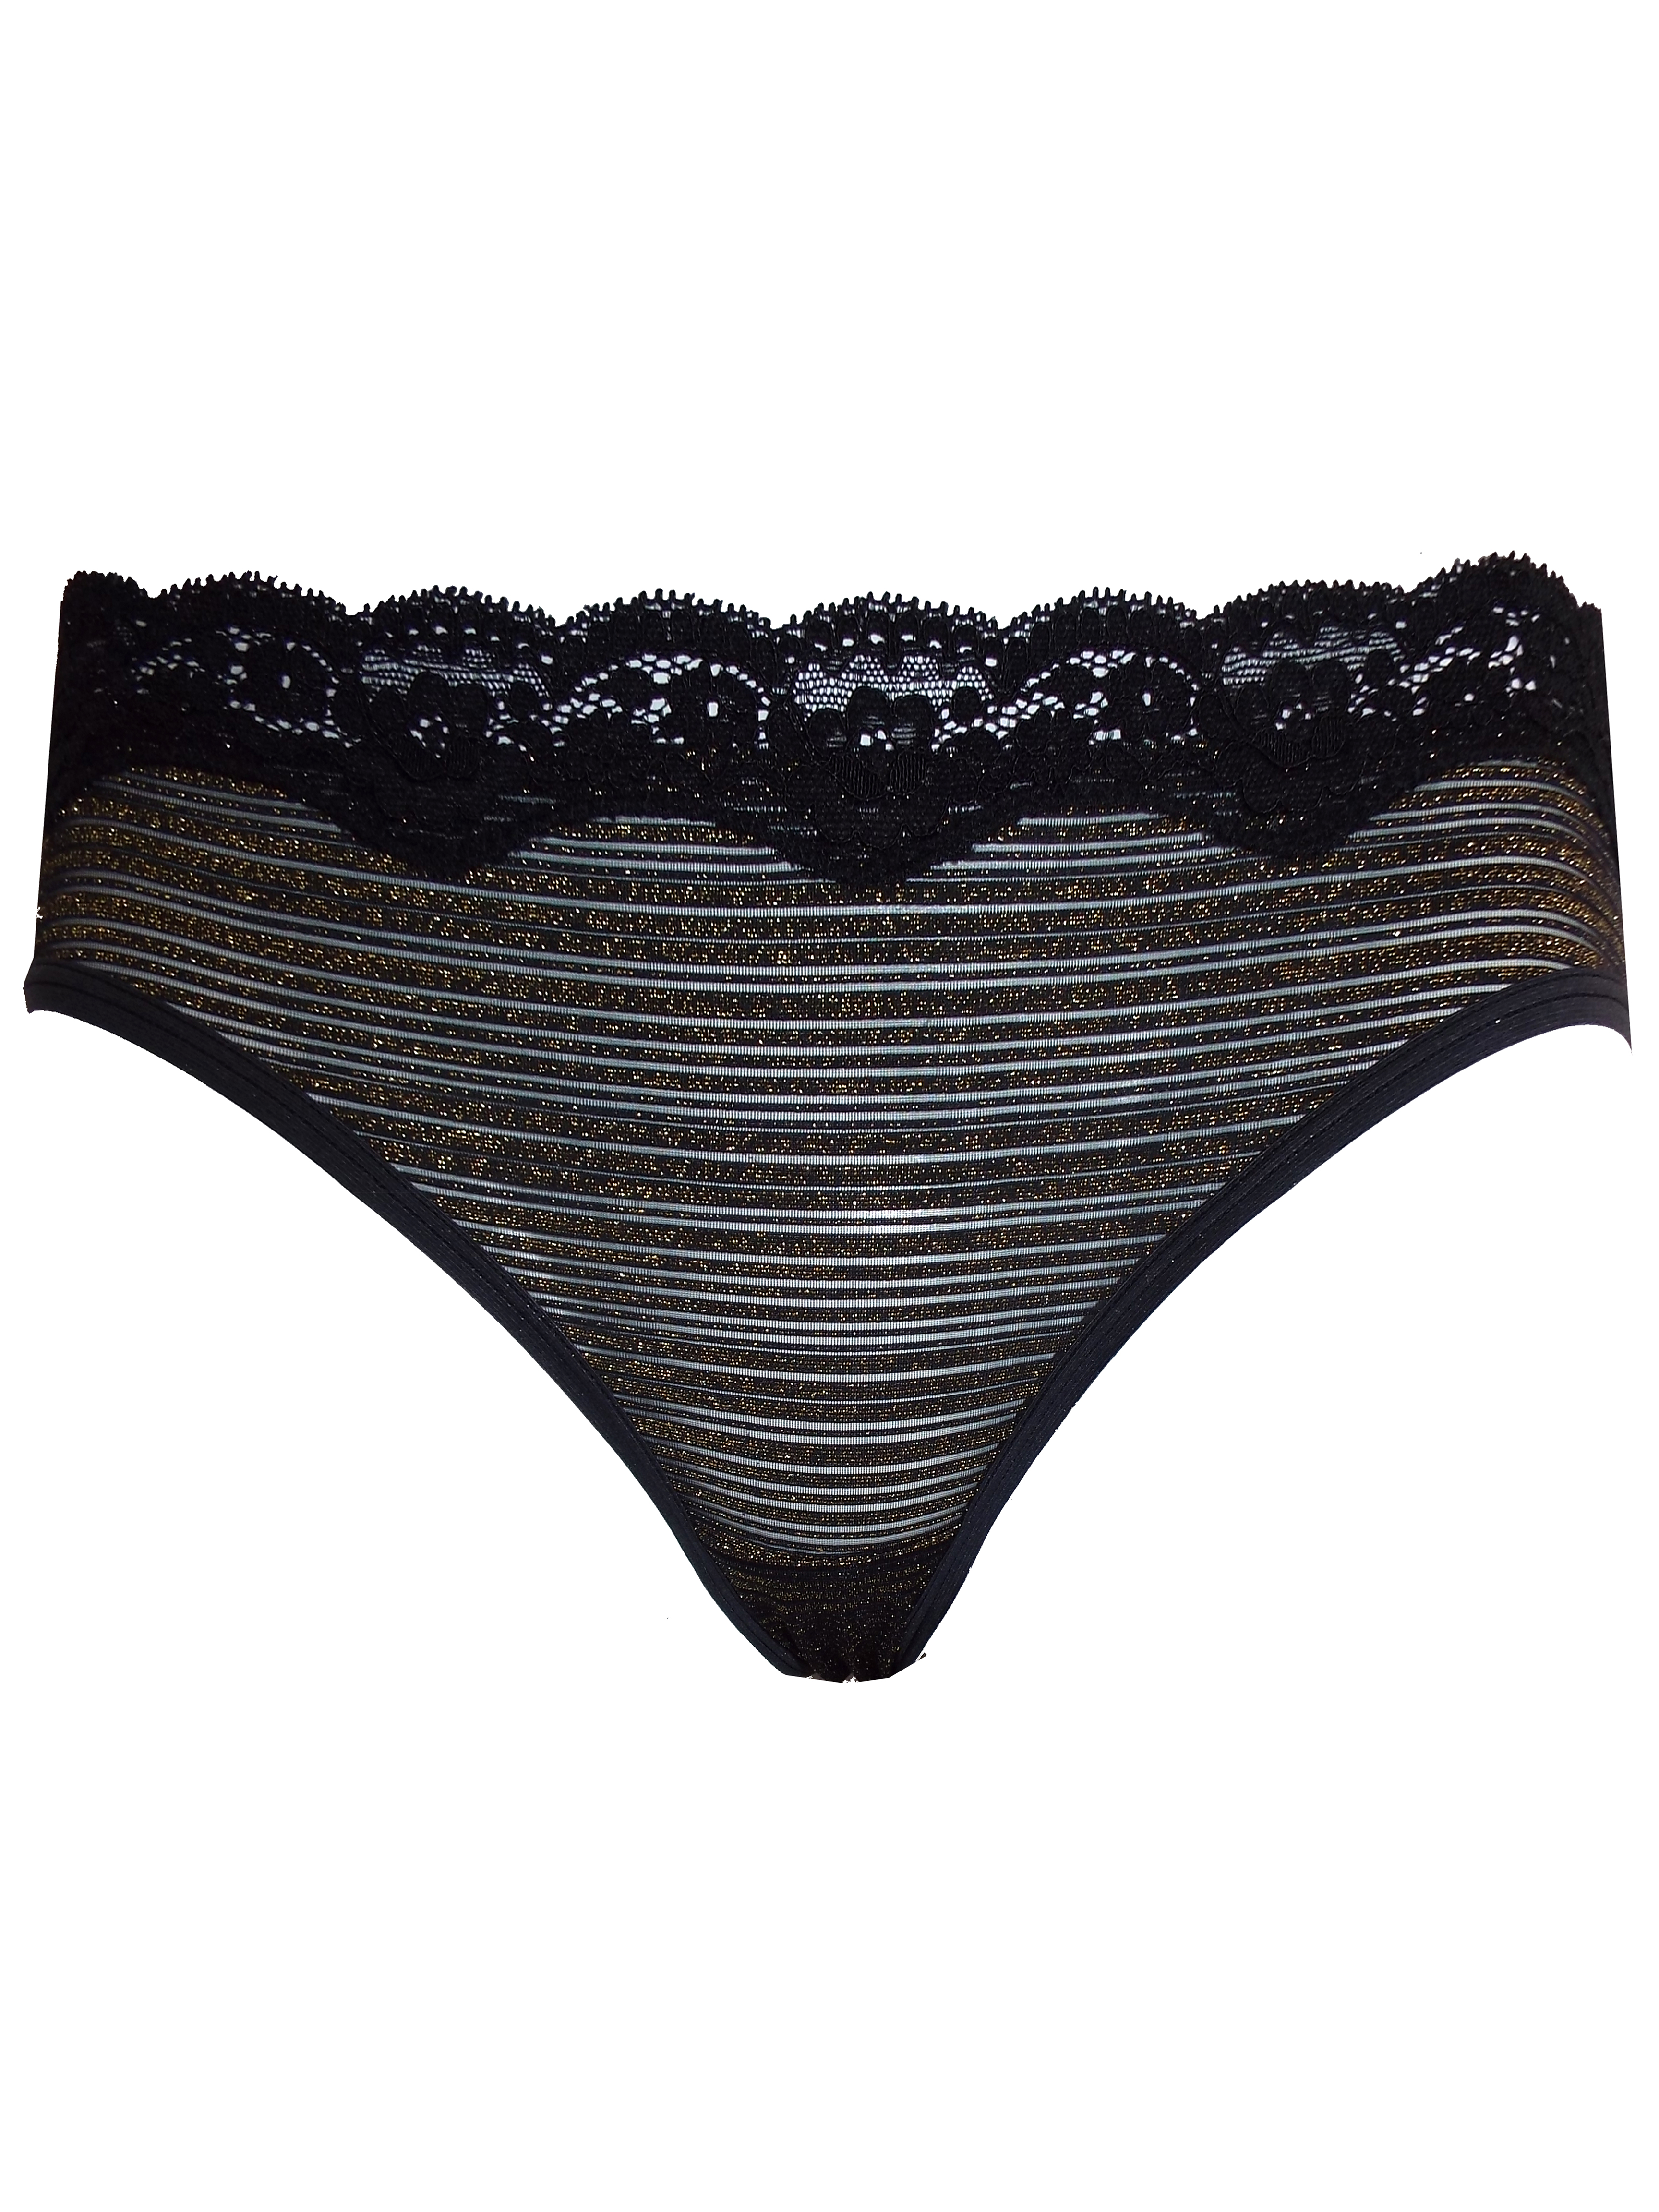 N3XT BLACK Lace Trim Burnout Shimmer Stripe Brazilian Knickers - Size ...